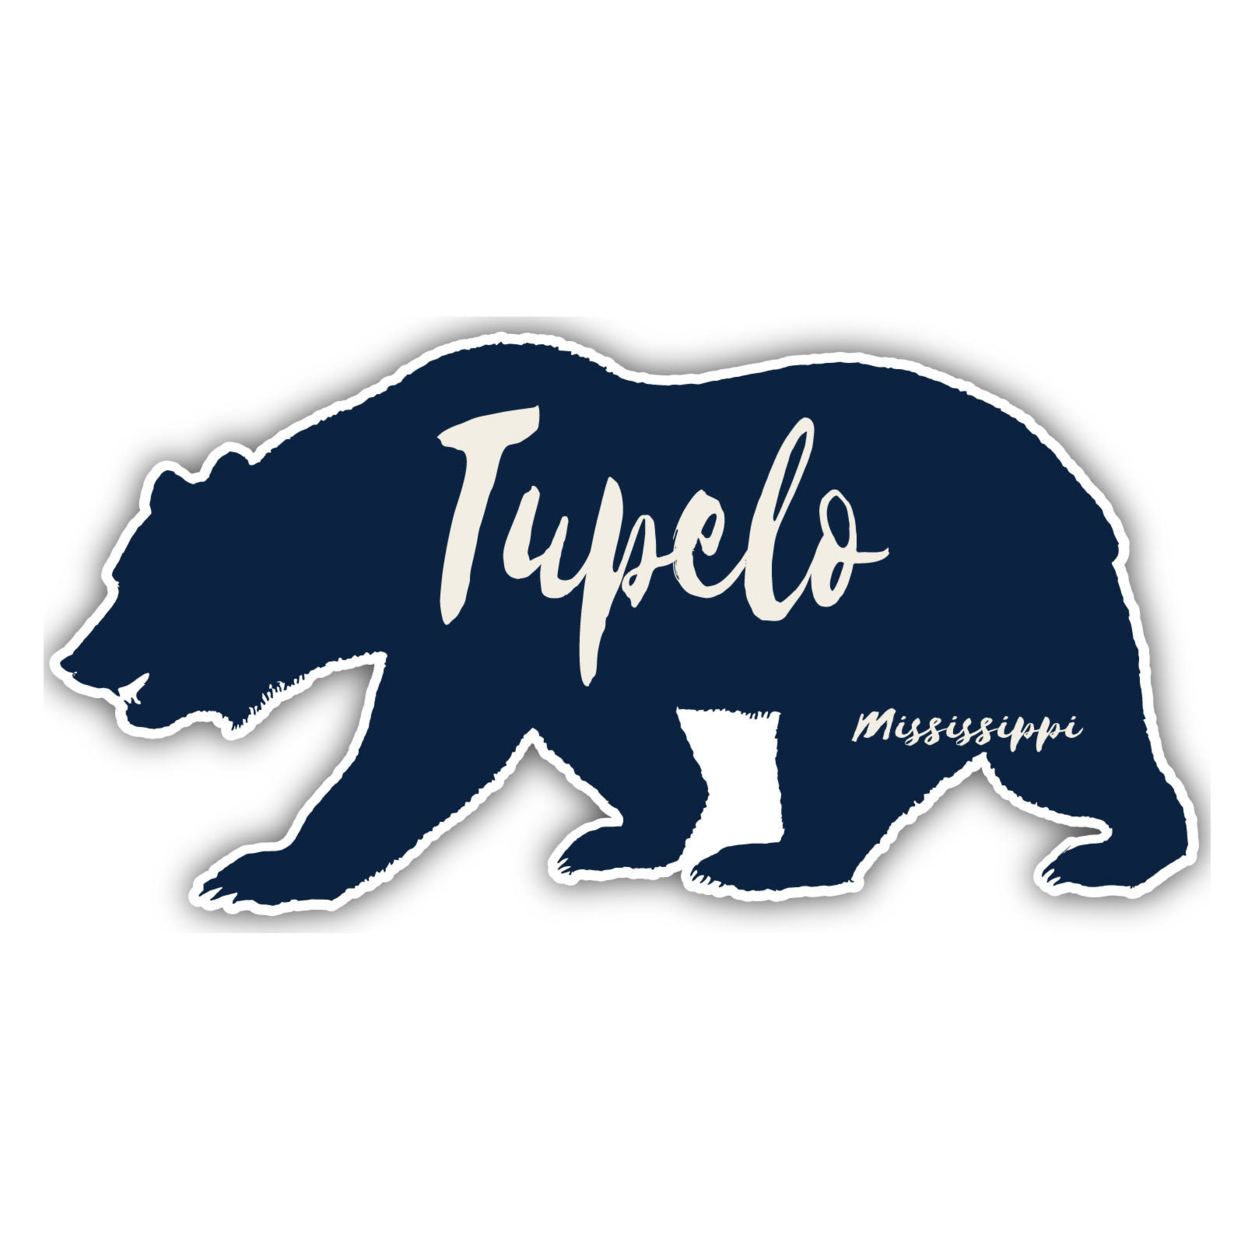 Tupelo Mississippi Souvenir Decorative Stickers (Choose Theme And Size) - Single Unit, 4-Inch, Bear